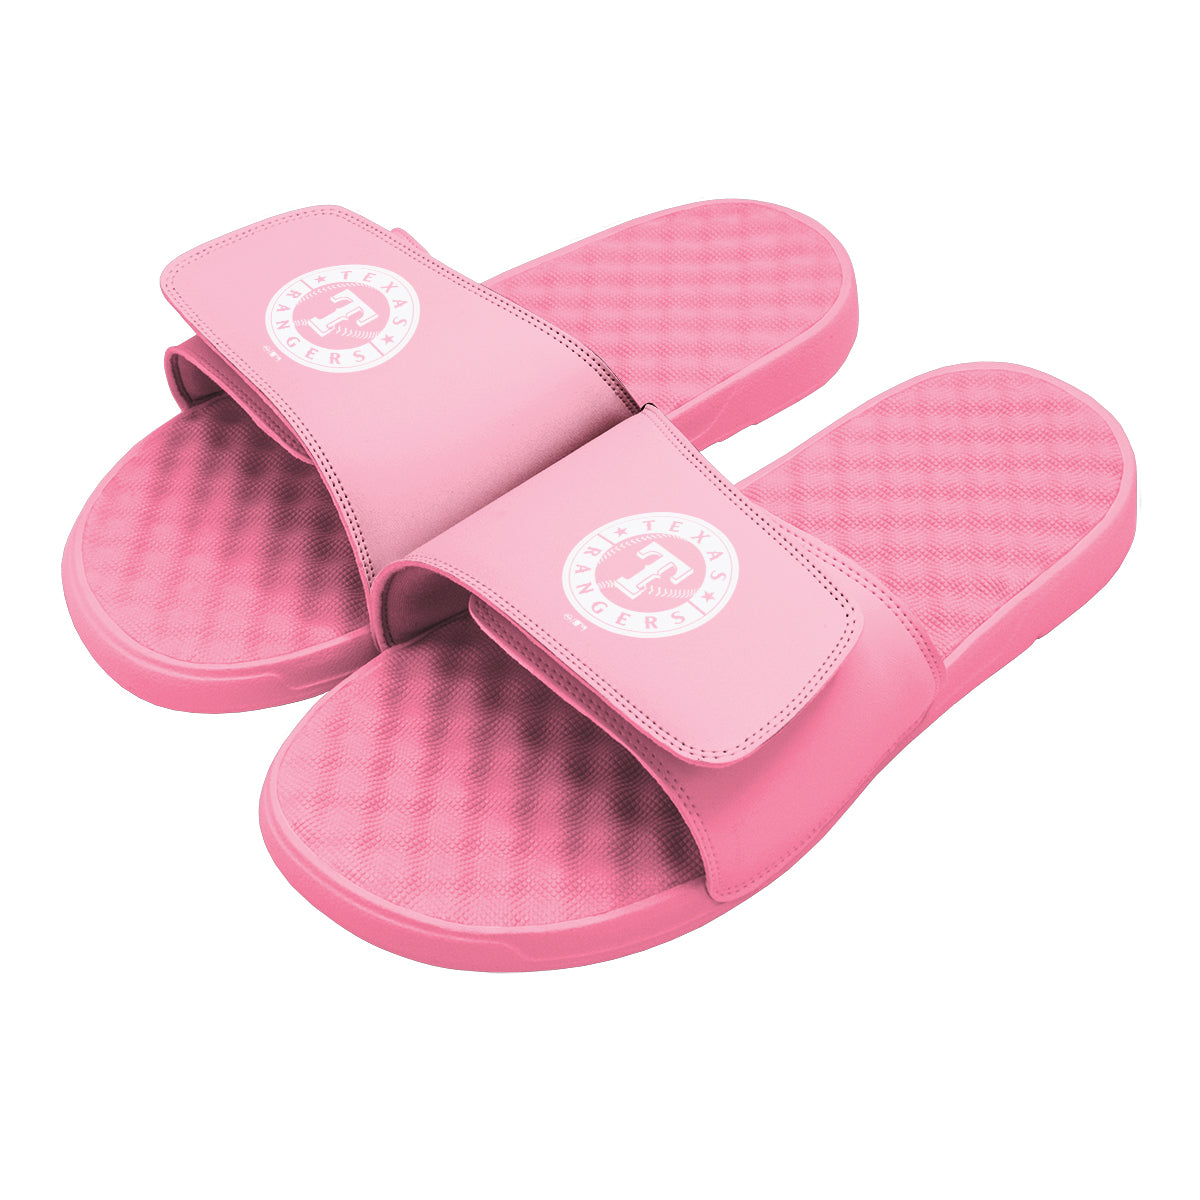 Texas Rangers Primary Pink Slides